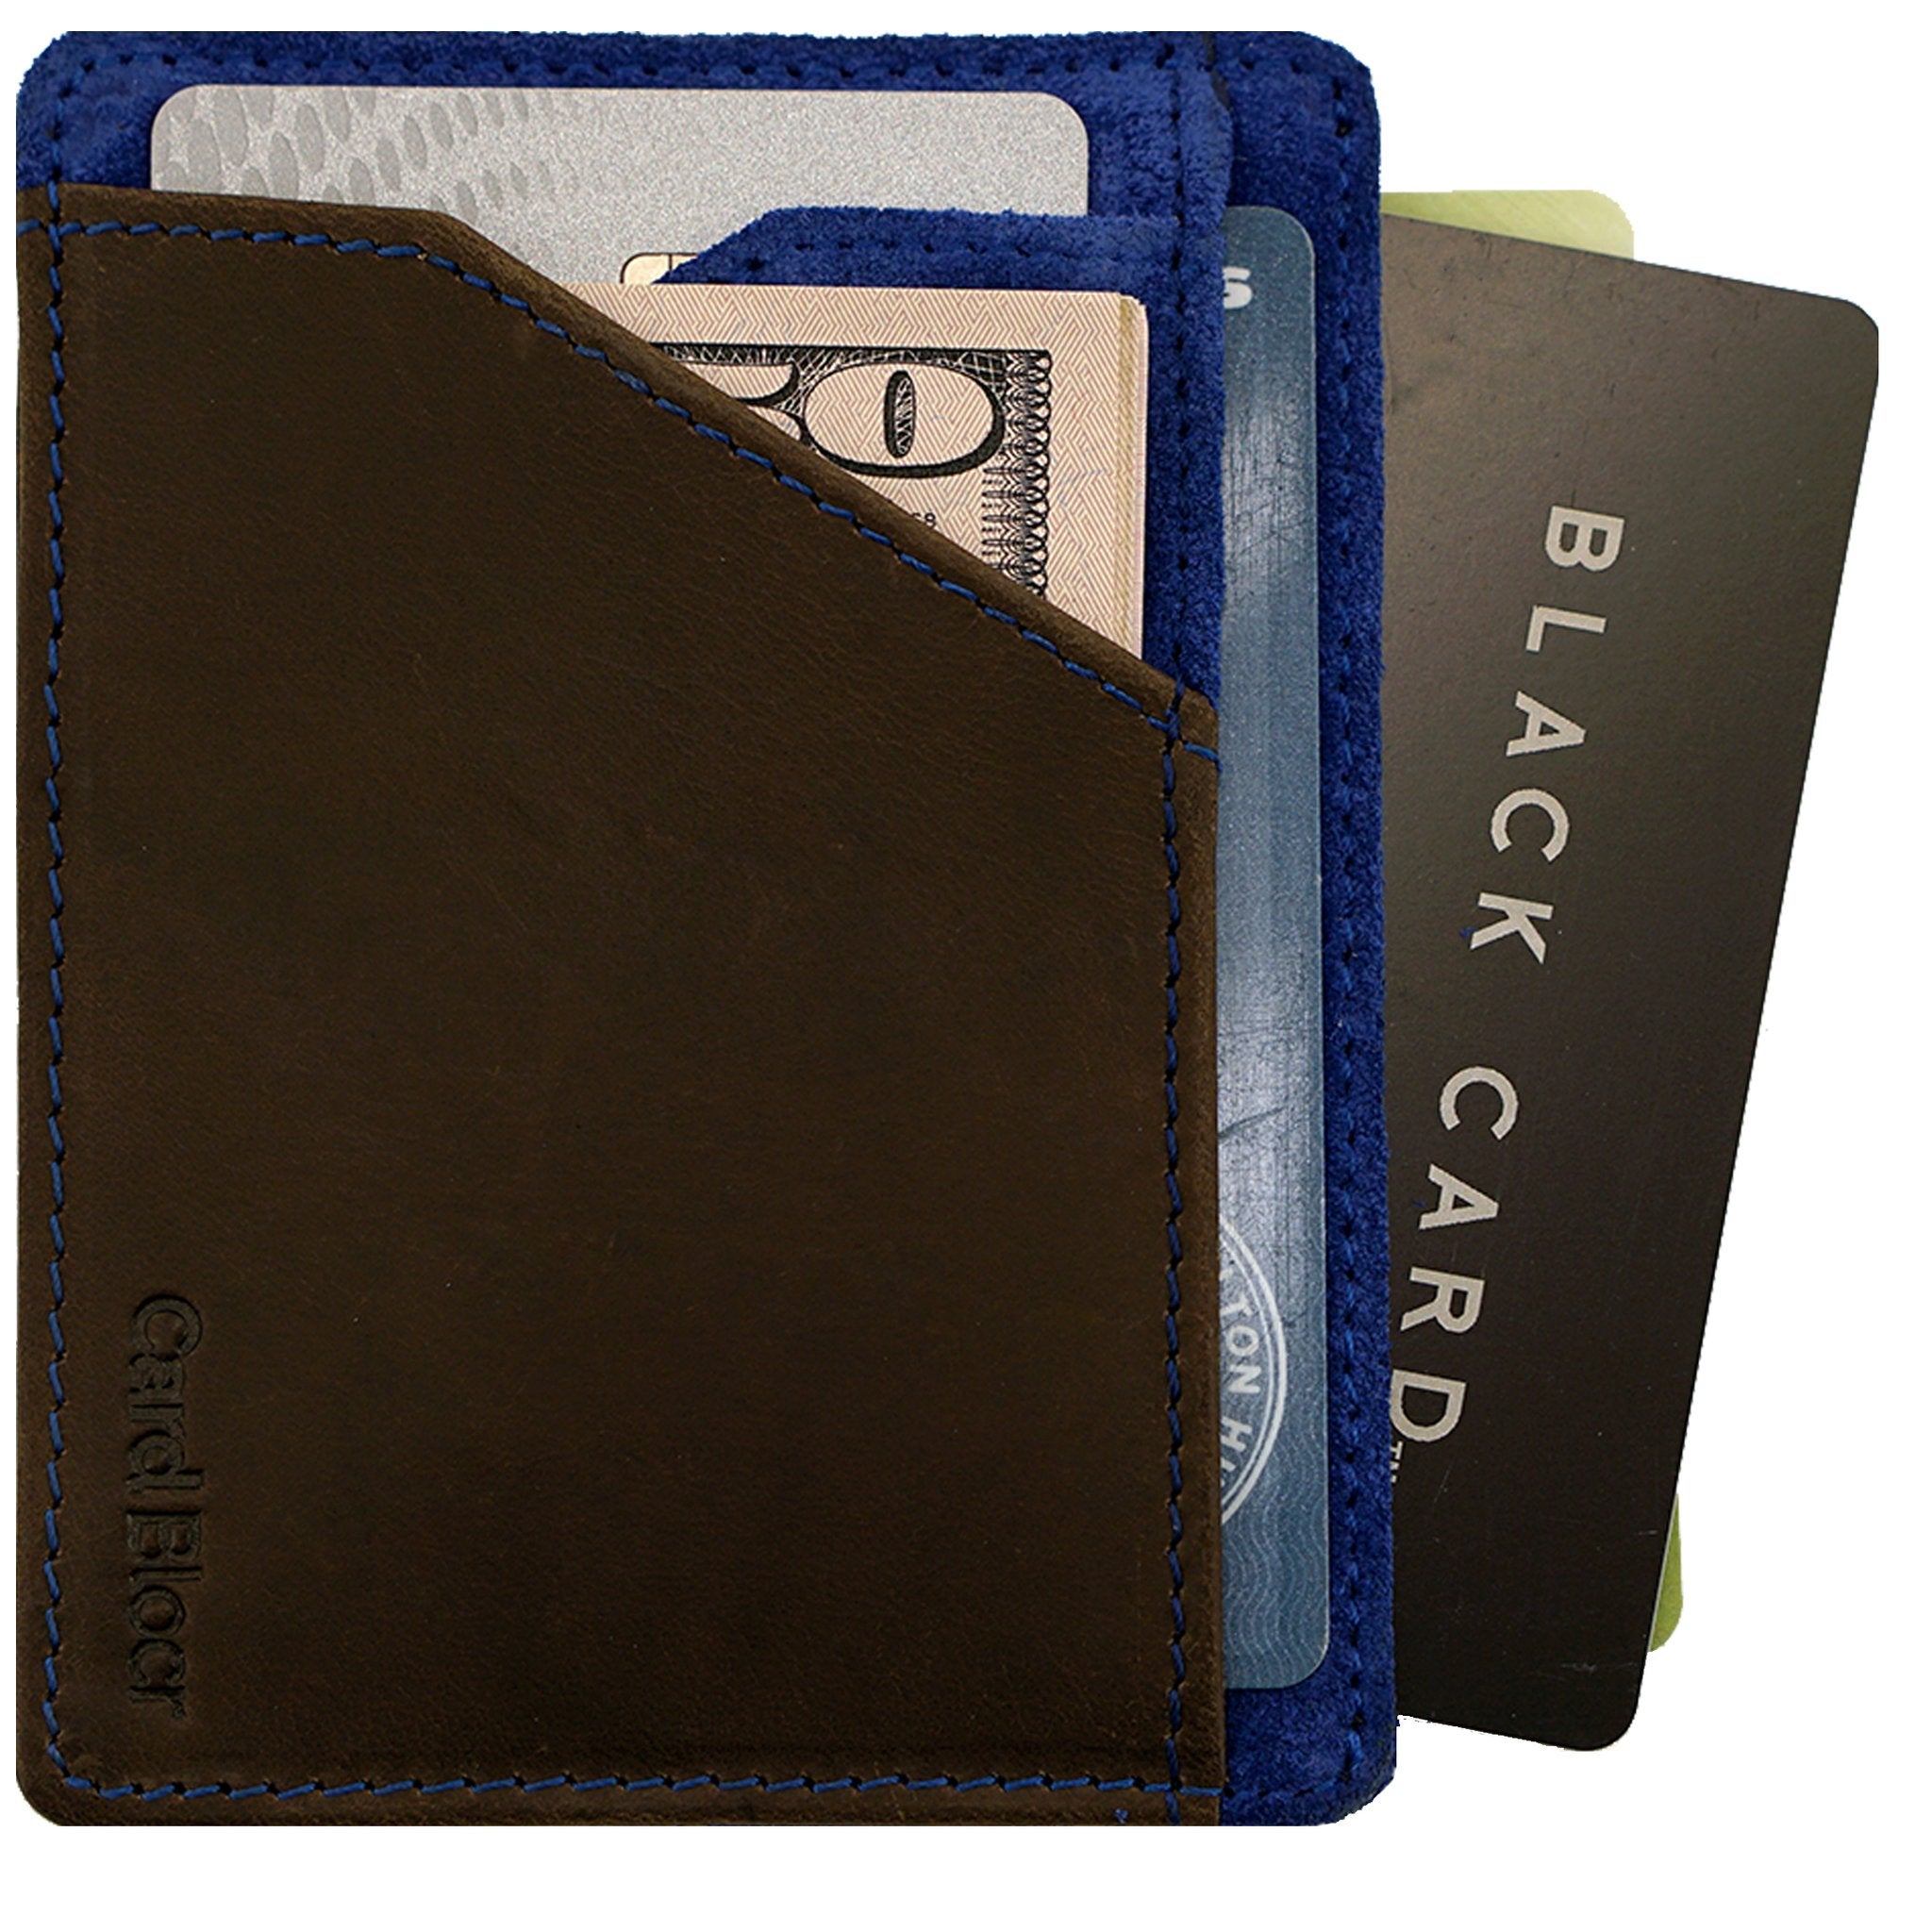 pickpocket proof wallets